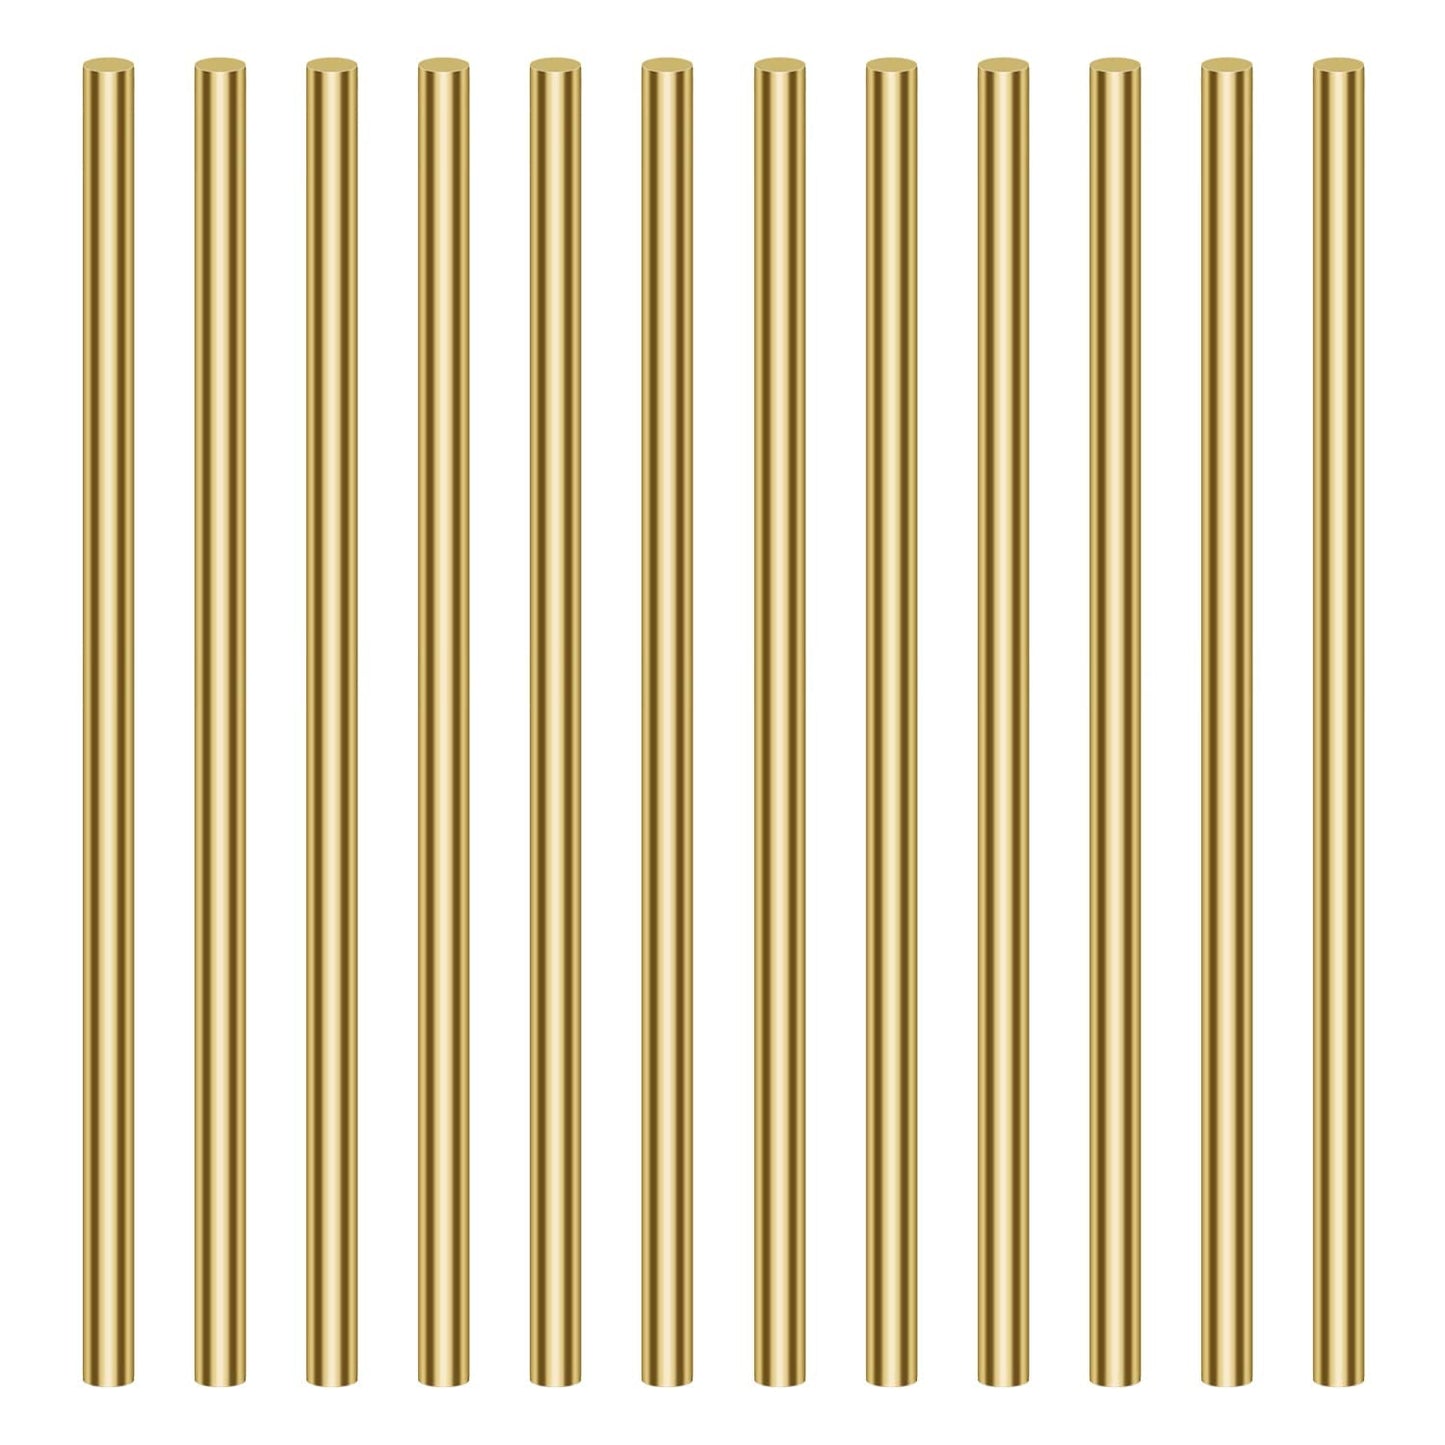 Brass round Rods Bar Assorted Diameter 2-8Mm for DIY Craft (21 PCS)